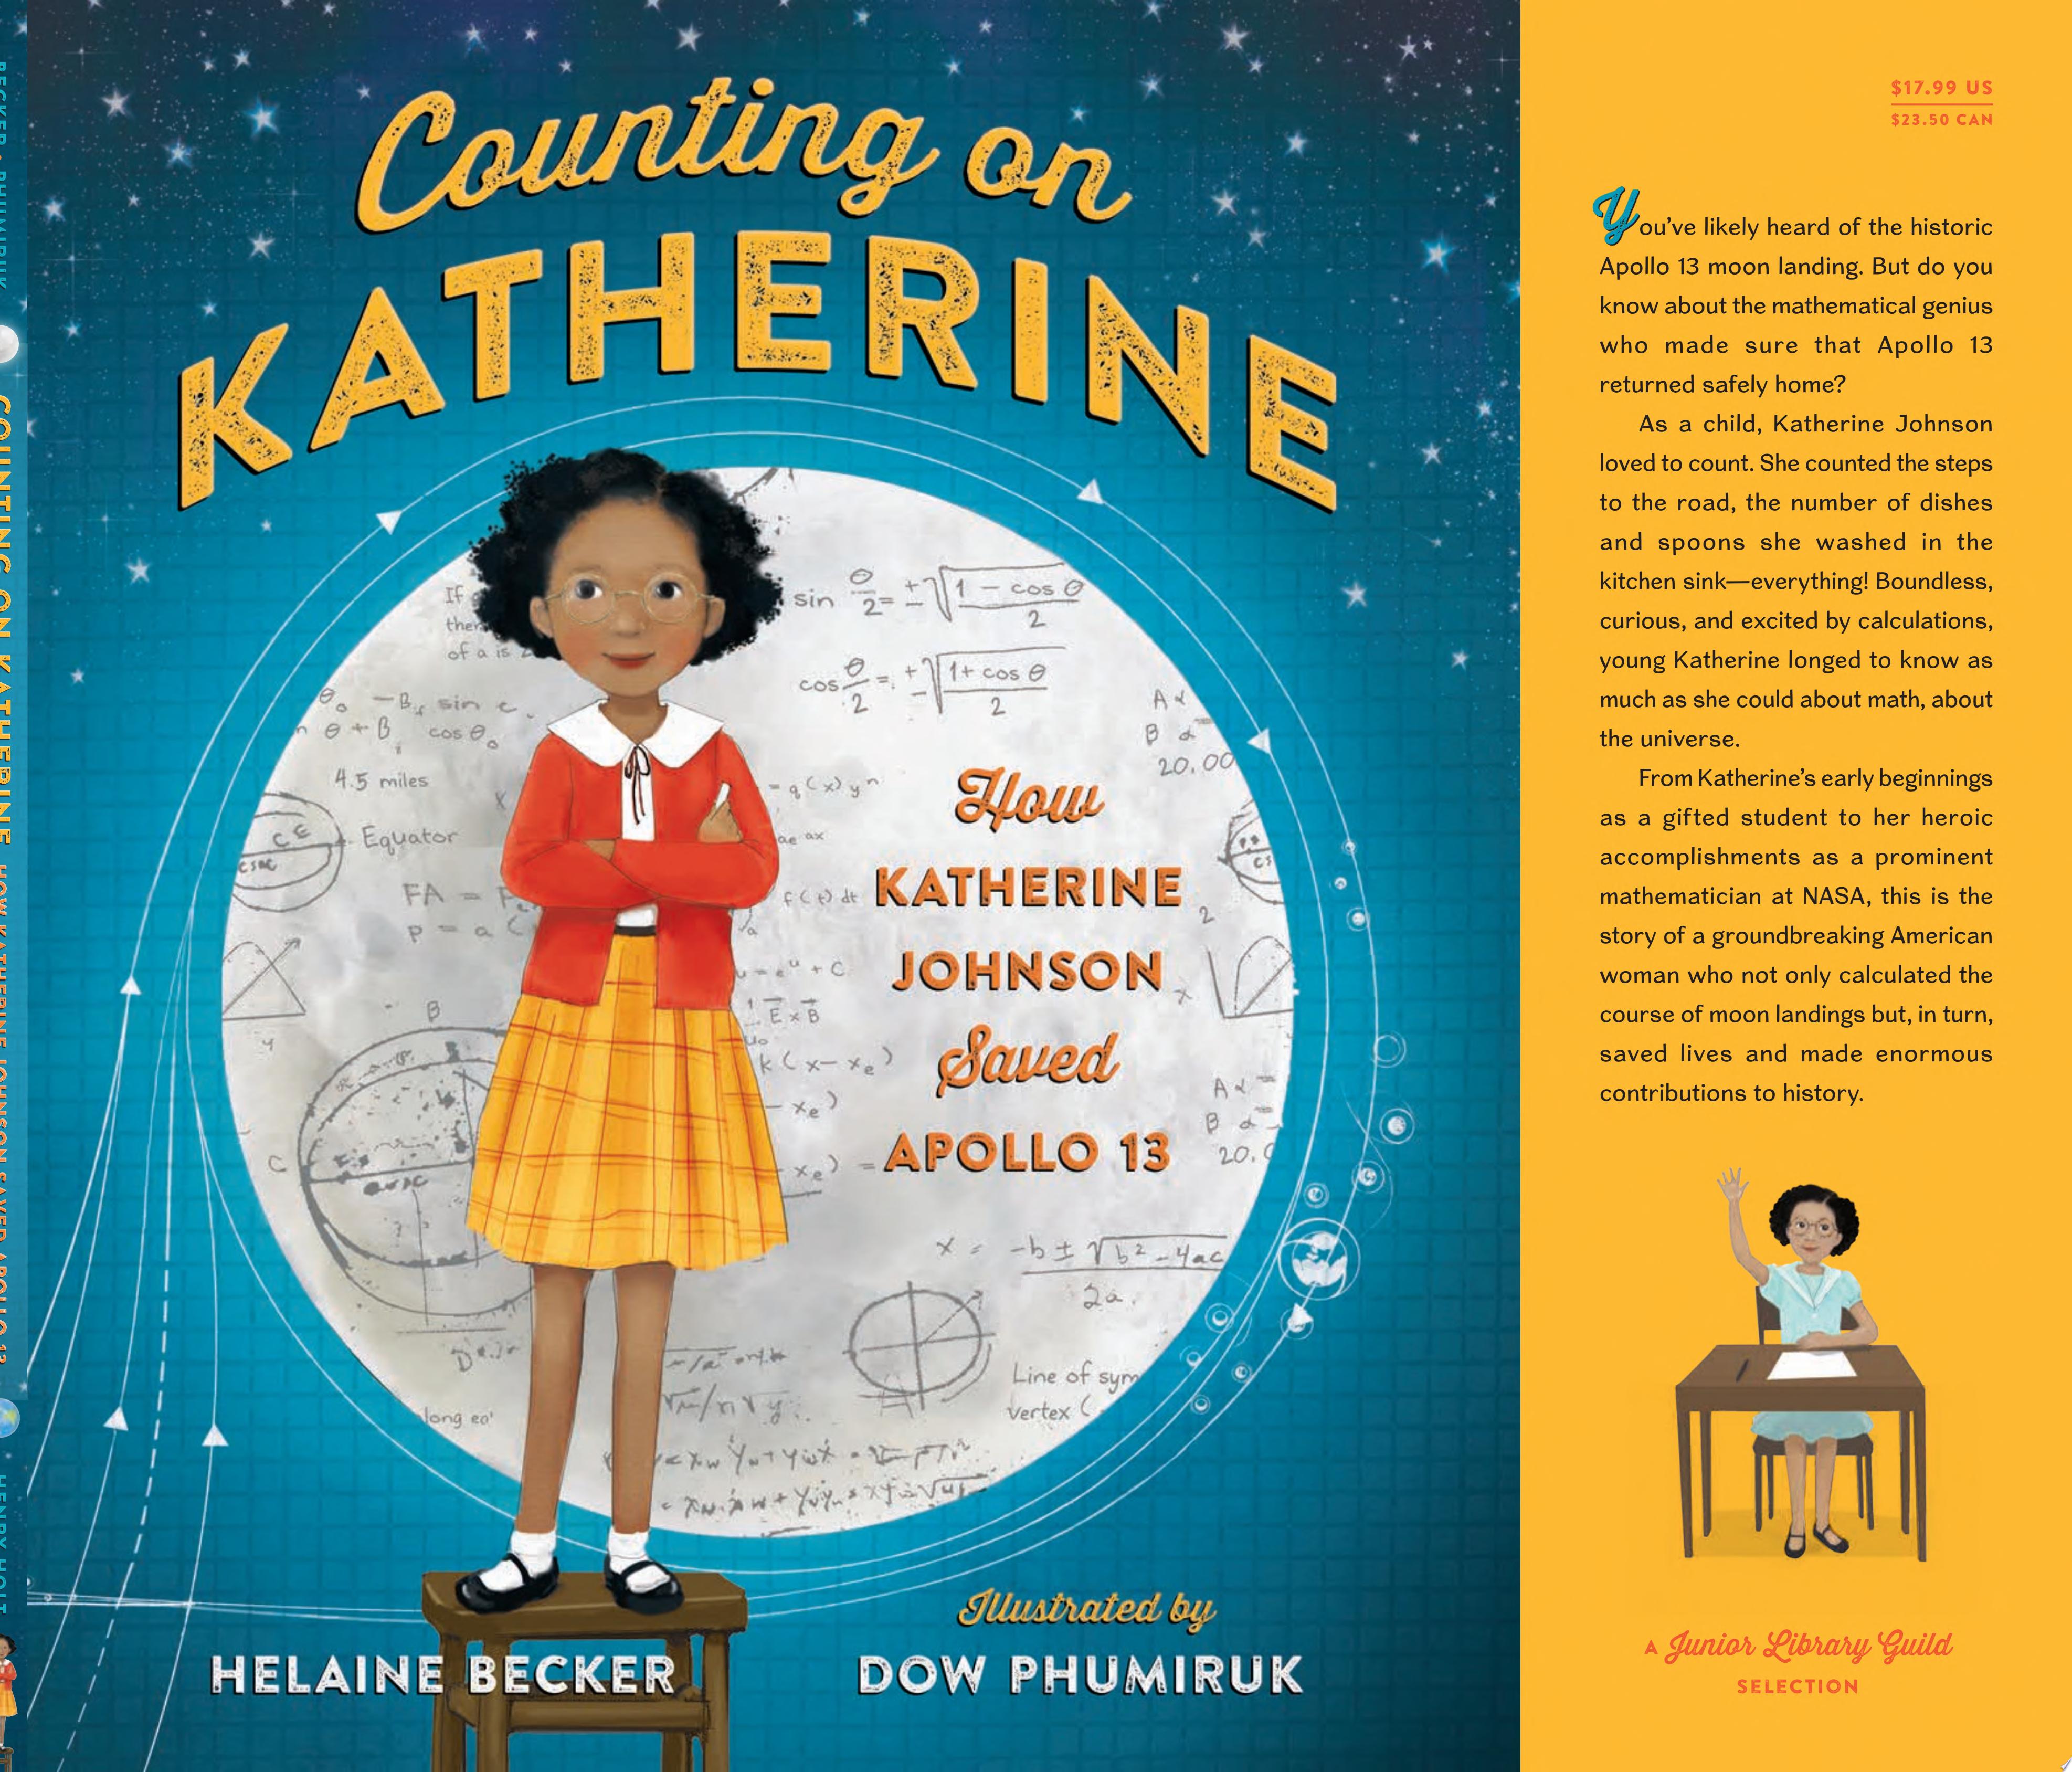 Image for "Counting on Katherine: How Katherine Johnson Saved Apollo 13"